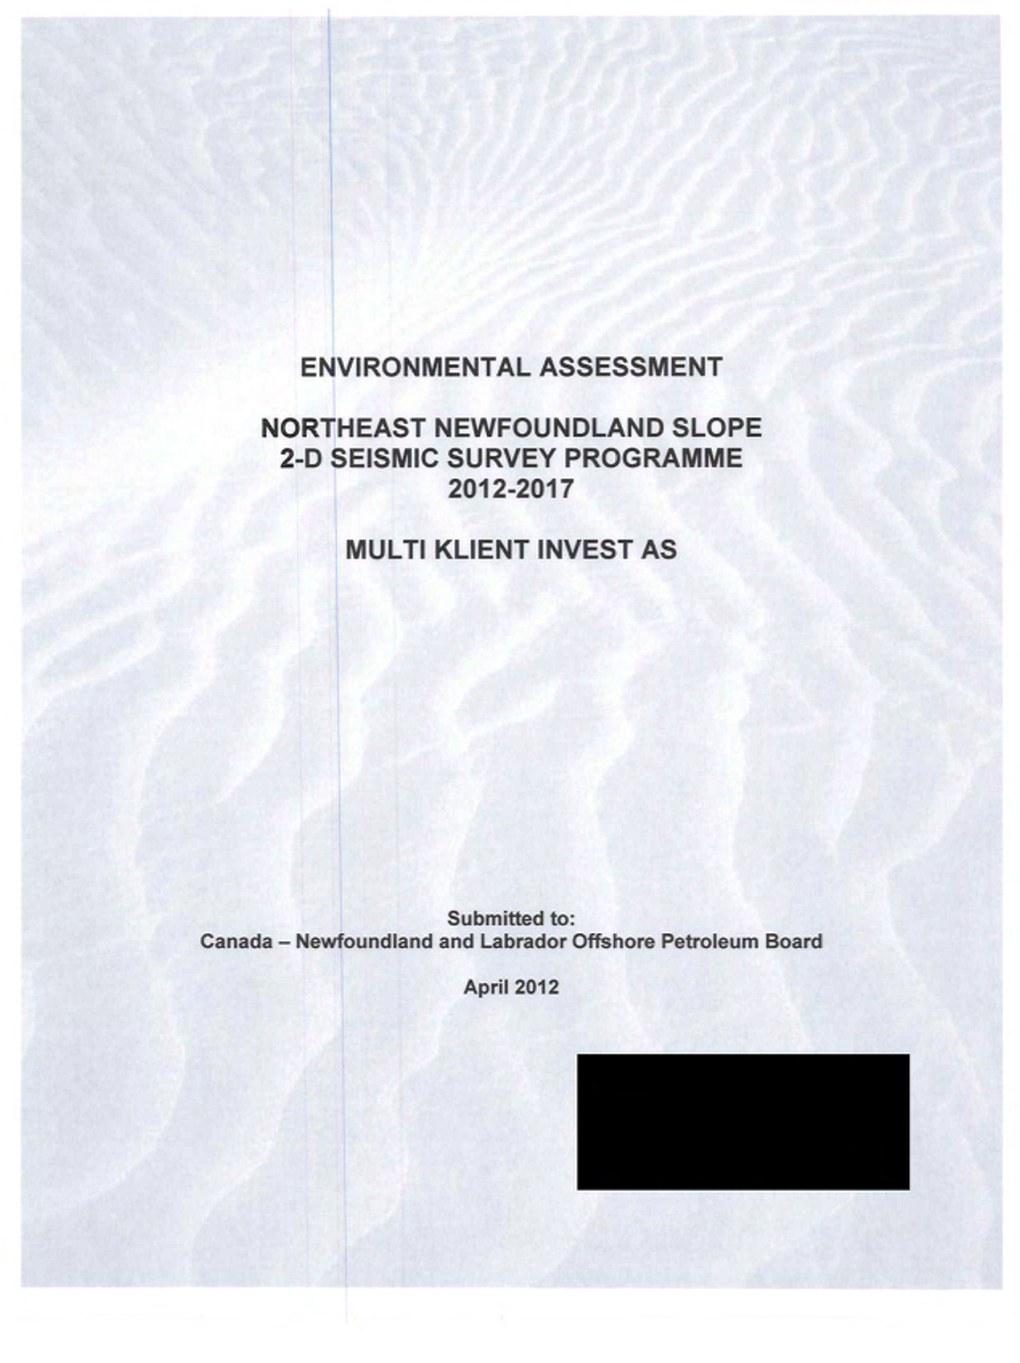 Environmental Assessment Northeast Newfoundland Slope 2-D Seismic Survey Programme